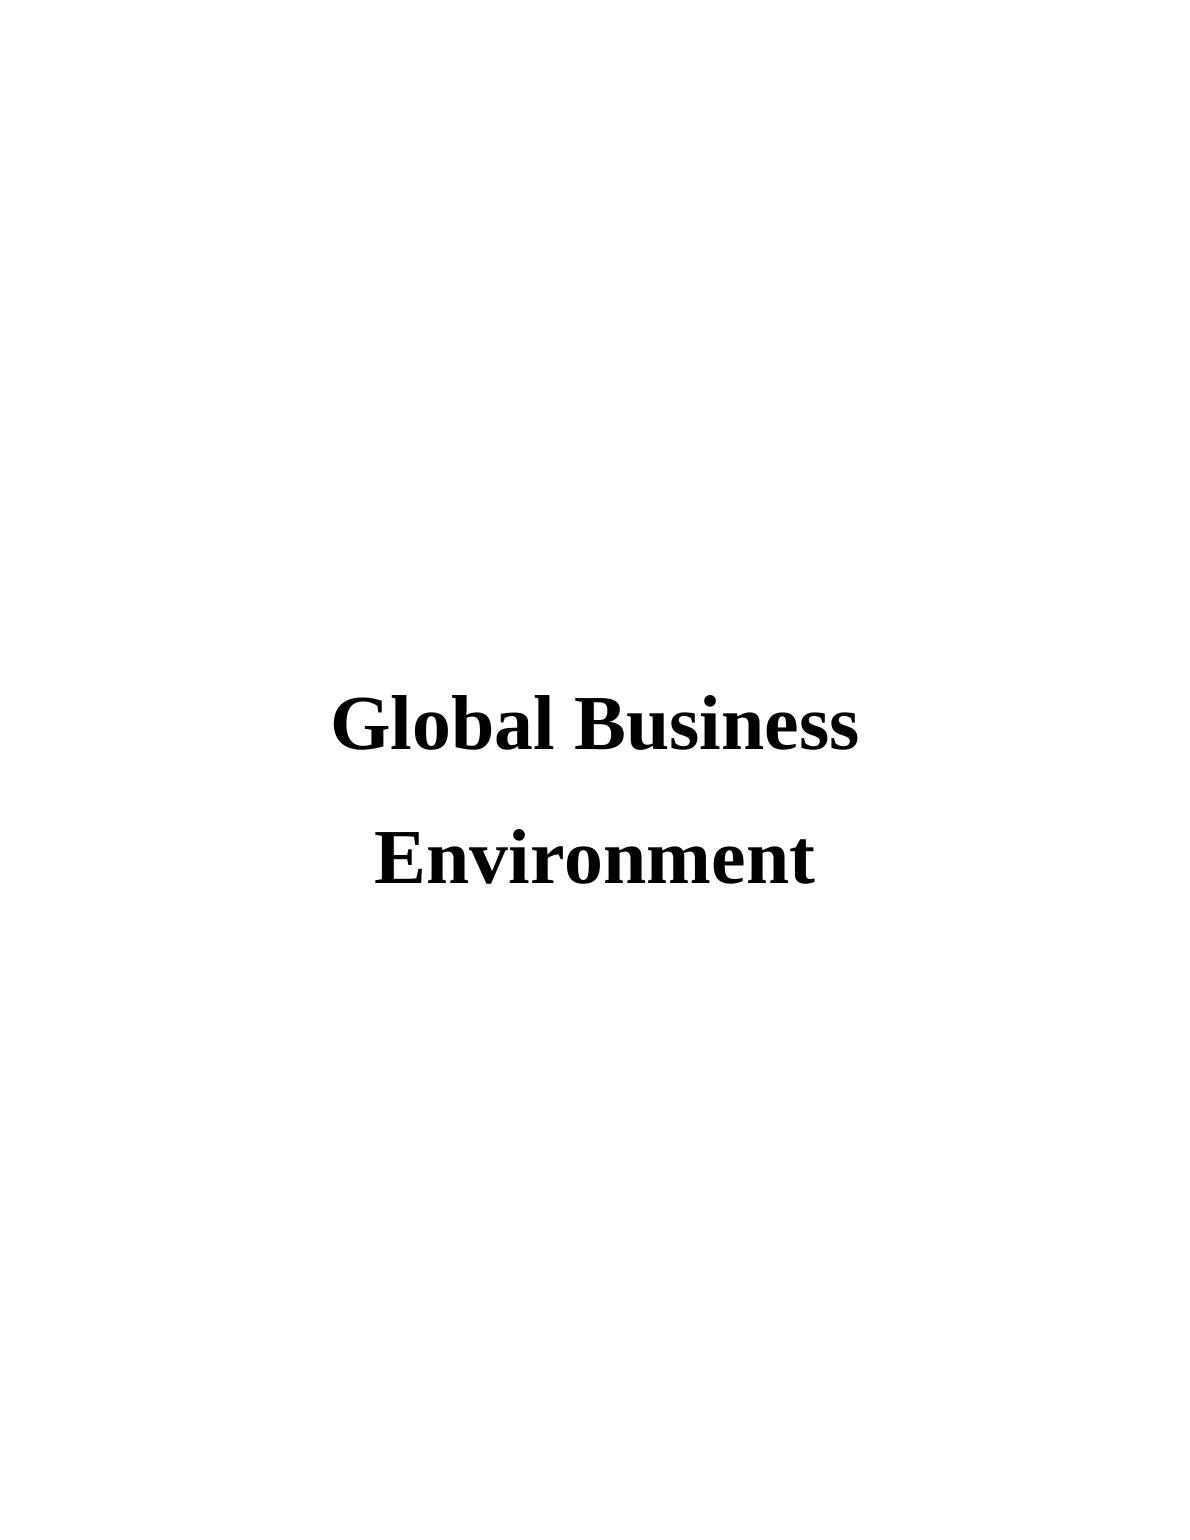 Global Business Environment- Assignment_1